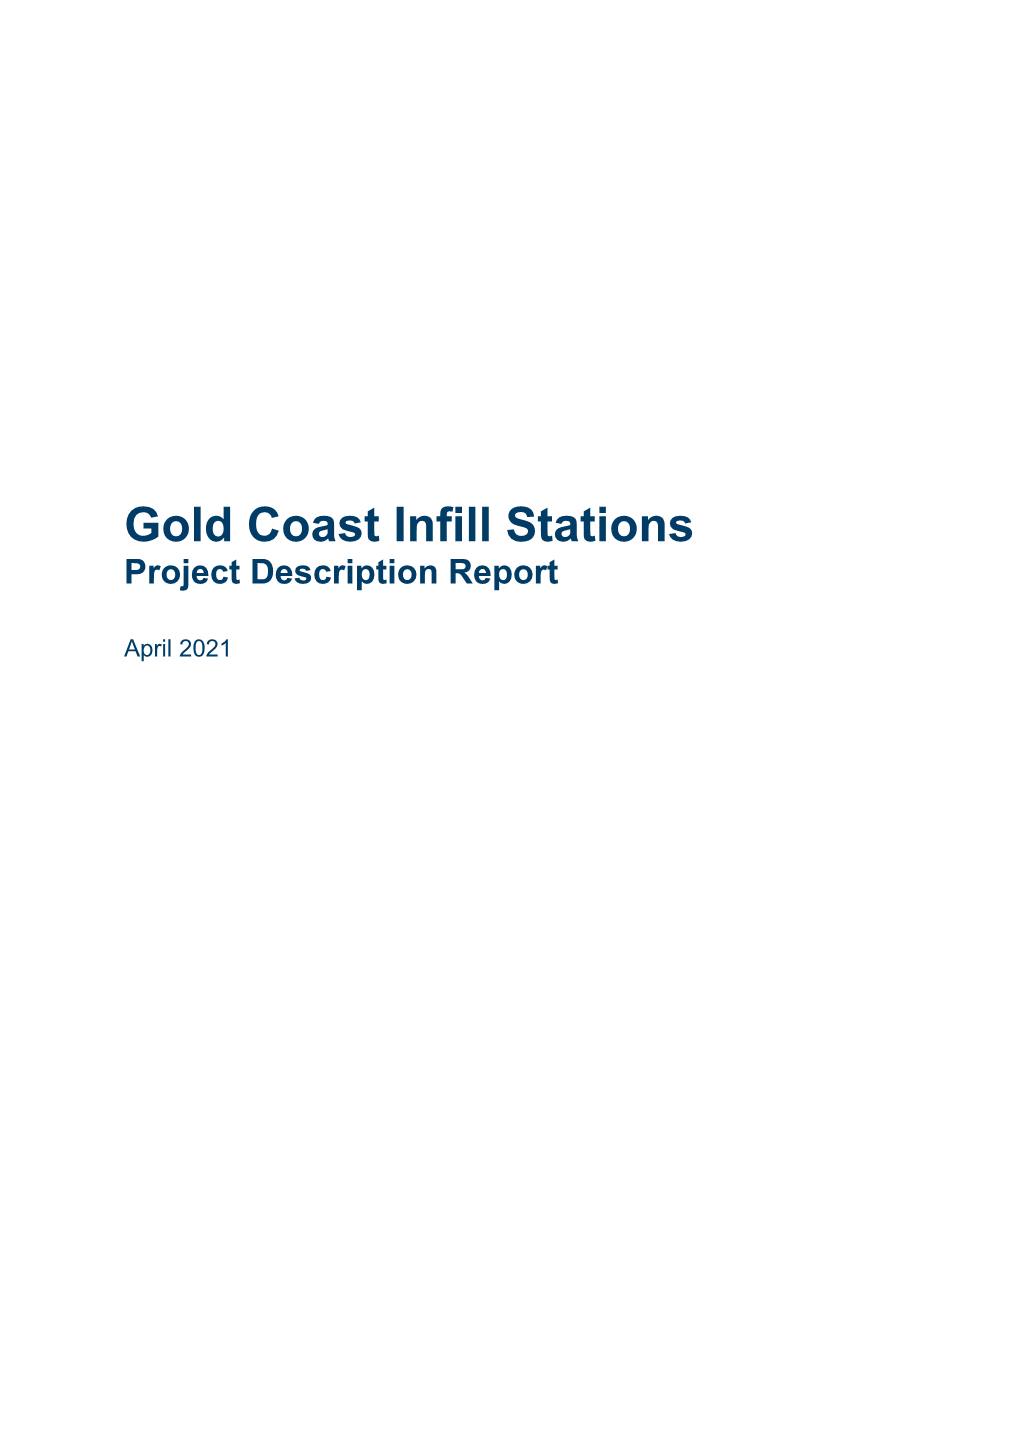 Gold Coast Infill Stations Project Description Report